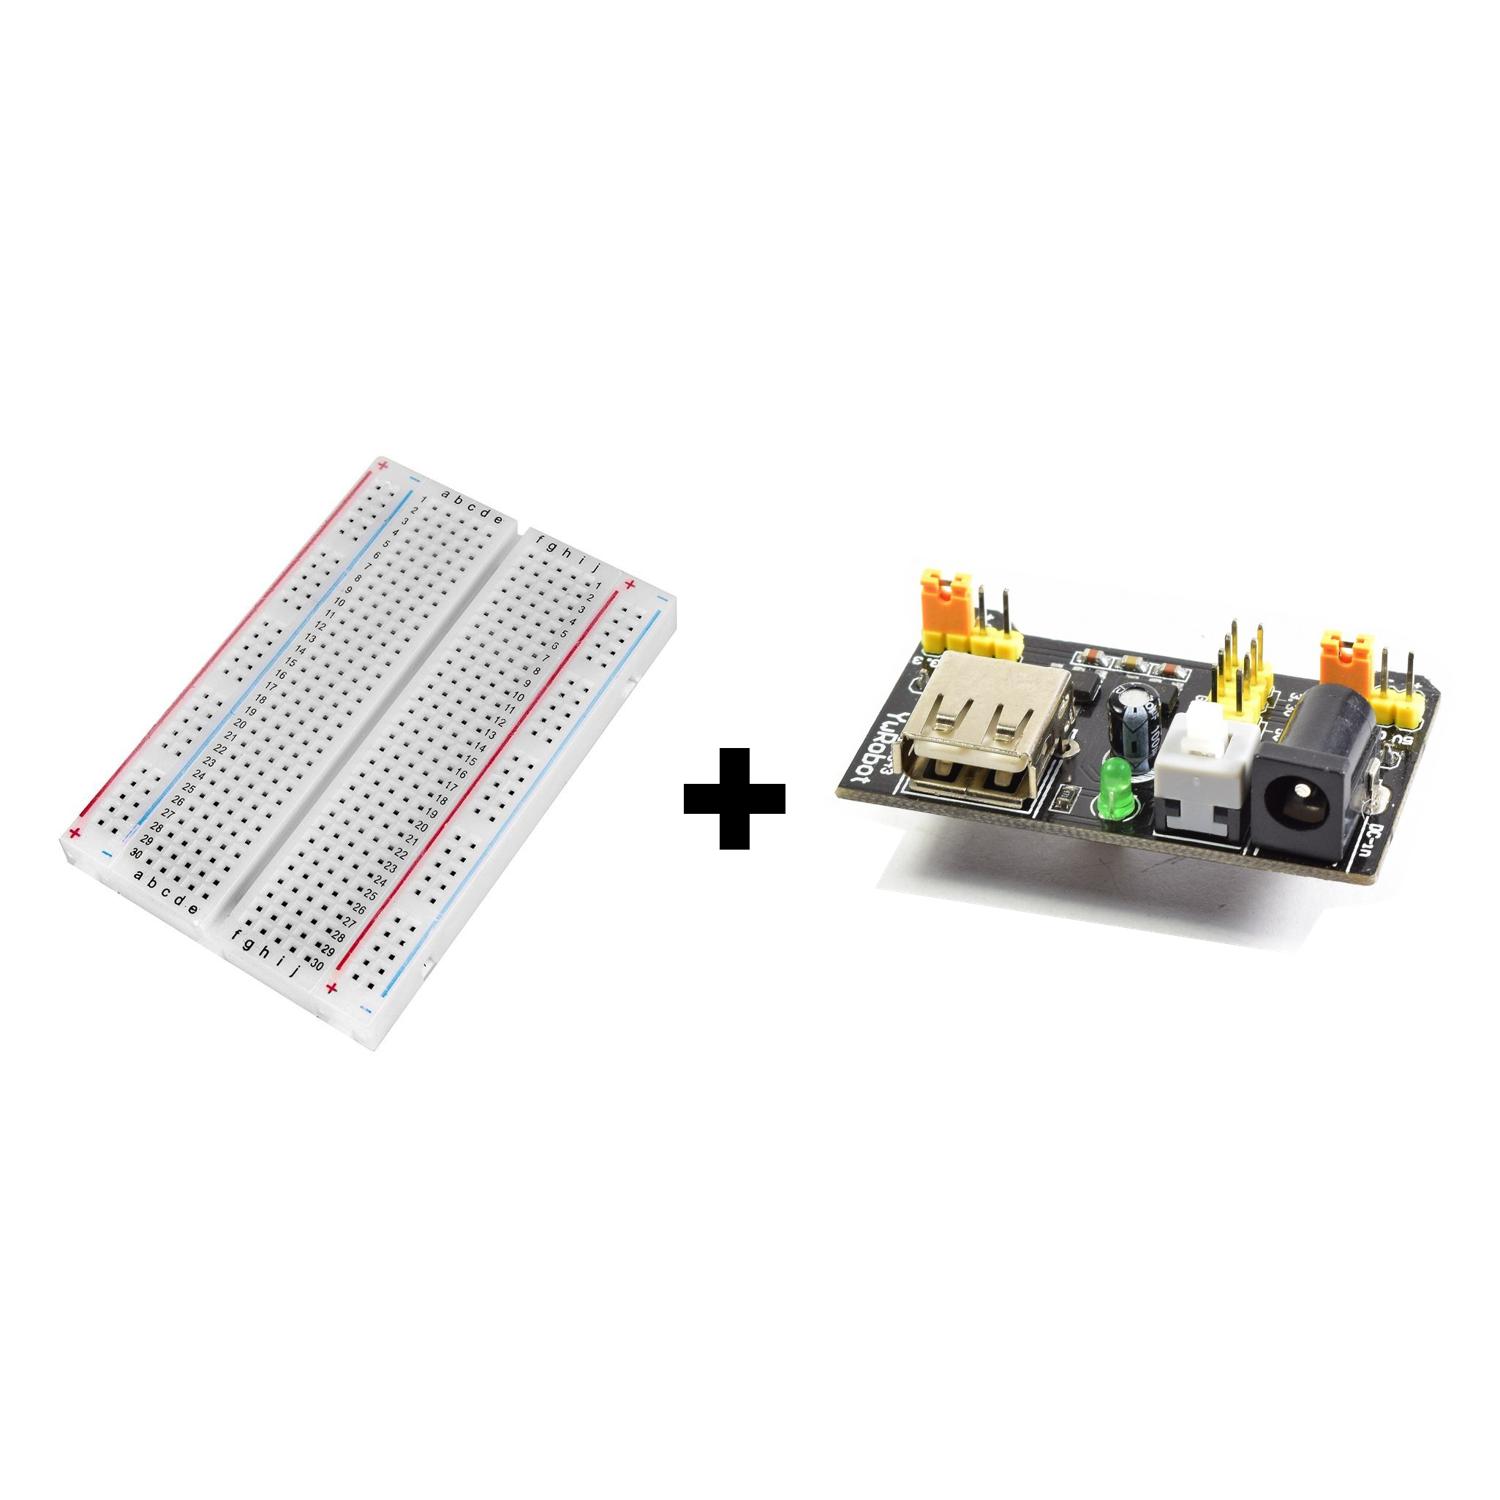 Paquete Protoboard 400 puntos Blanco MB102 + Fuente para Protoboard 3.3V o 5V (USB-A) MB102